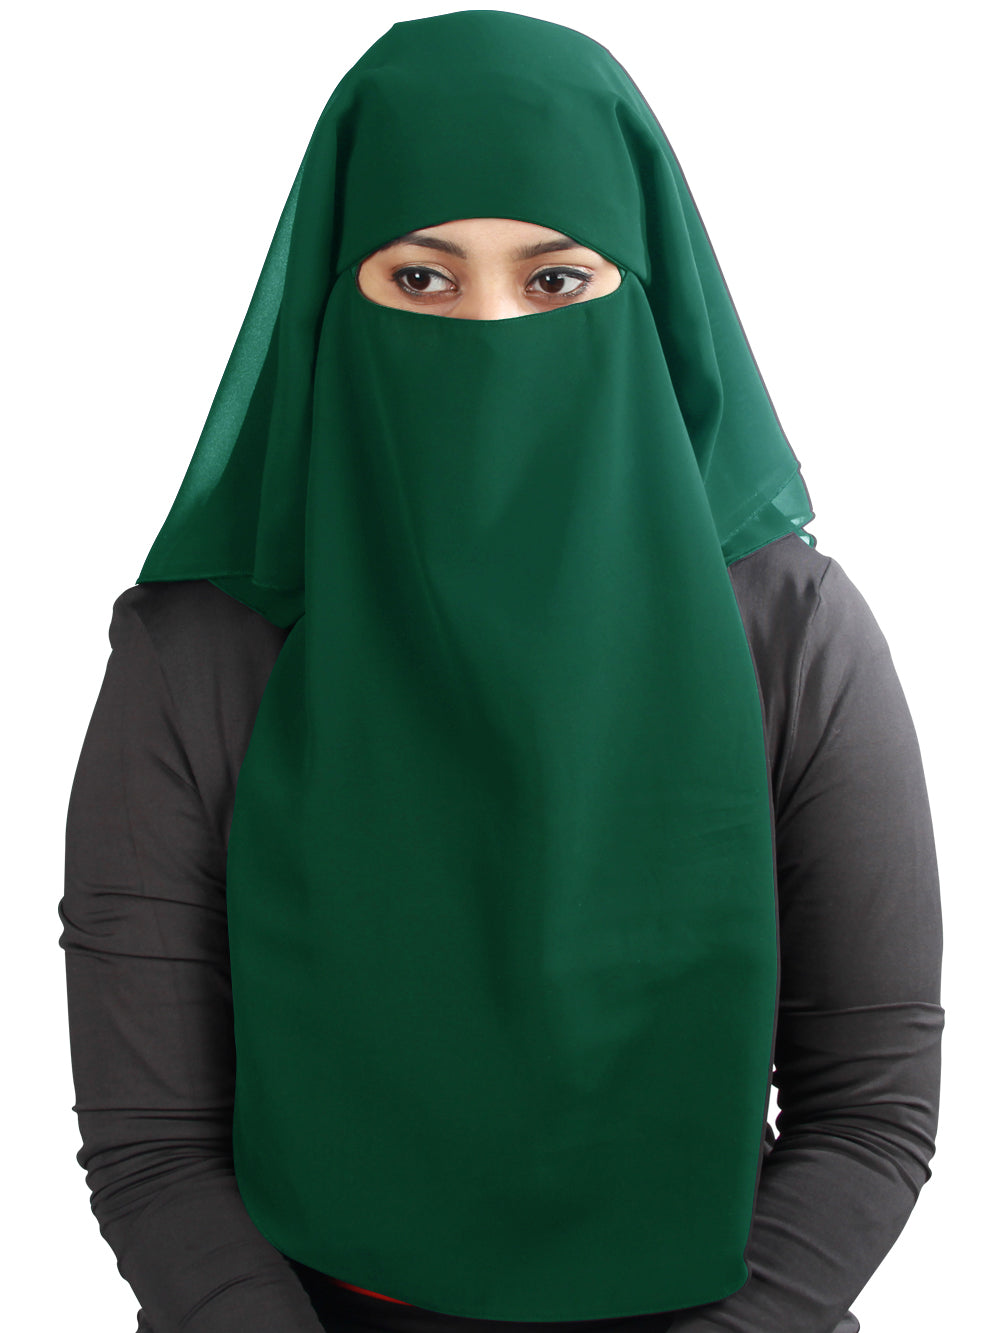 3 Layers Niqab In Black Georgette